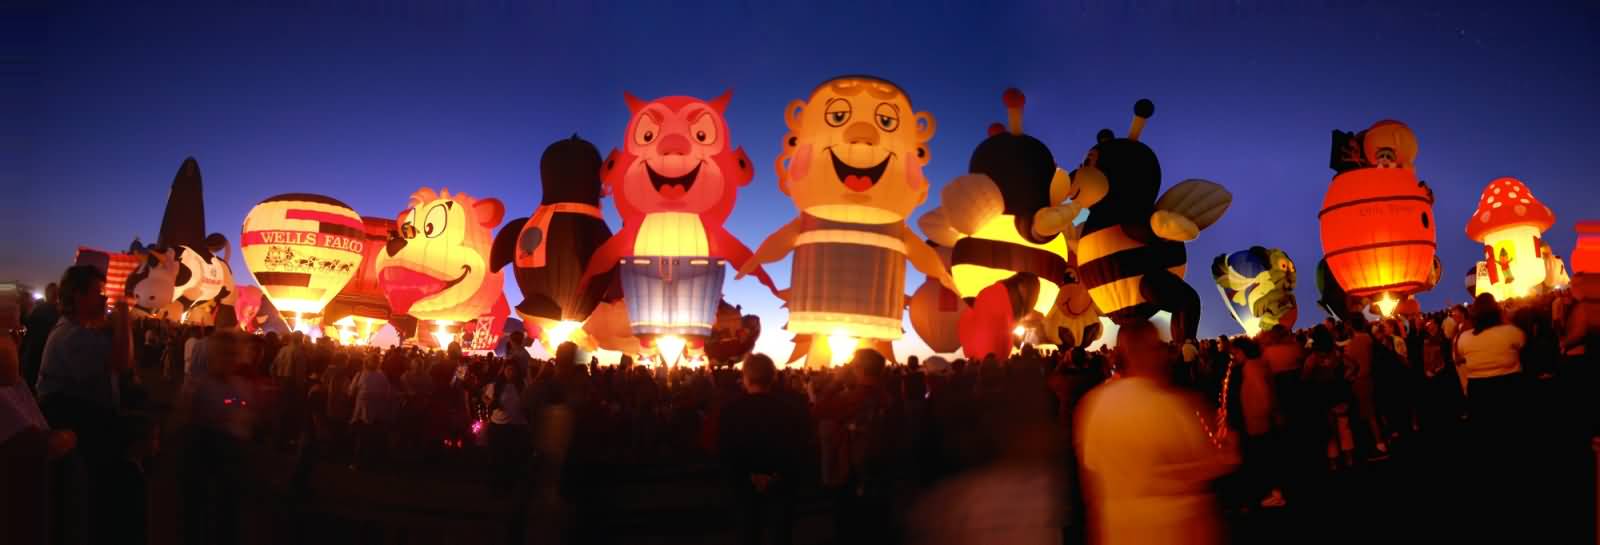 Hot Air Balloons Illuminated At Night During Albuquerque Balloon Festival